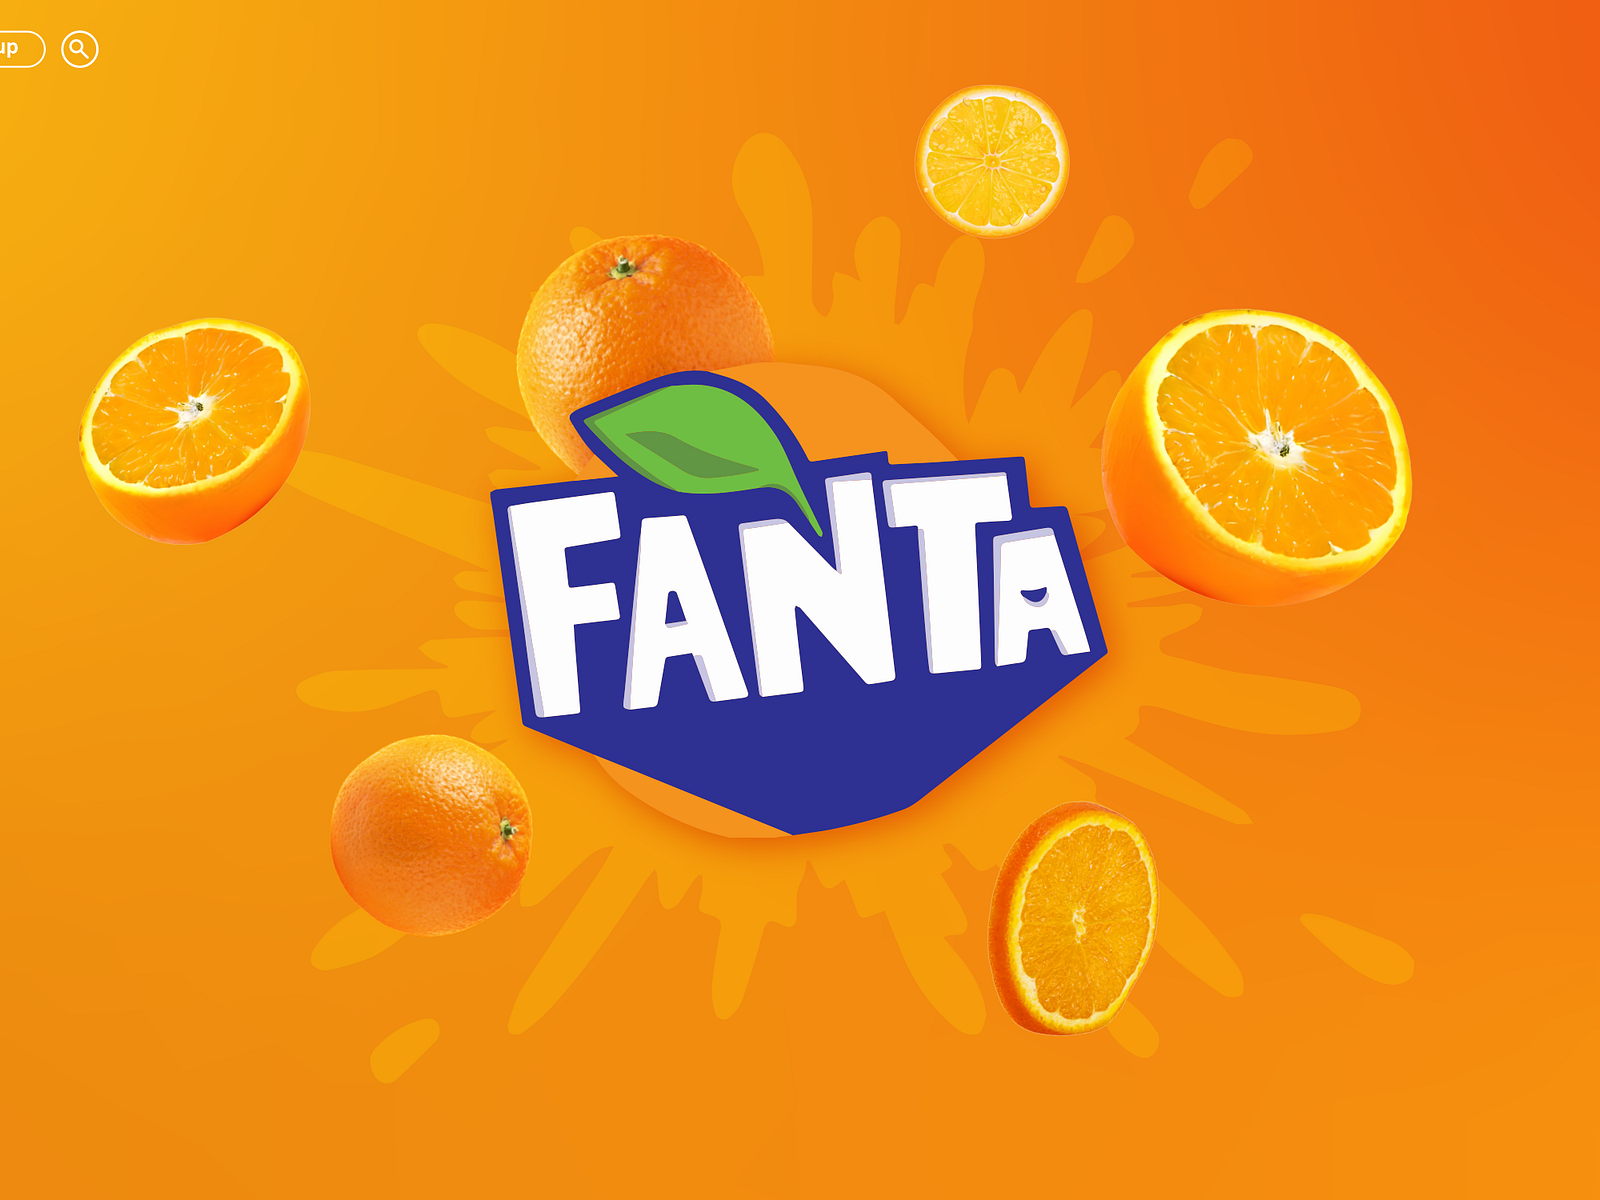 Fanta website redesign concept by Aleks Farkaš on Dribbble